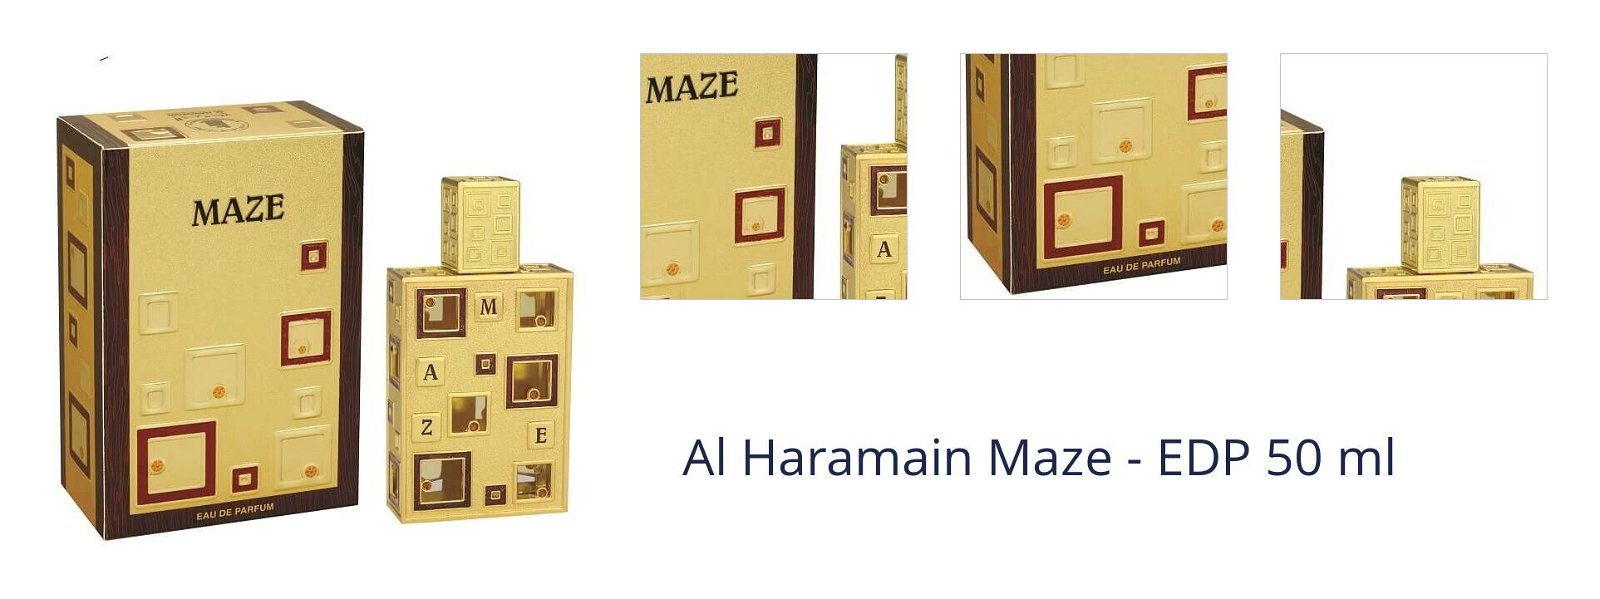 Al Haramain Maze - EDP 50 ml 7